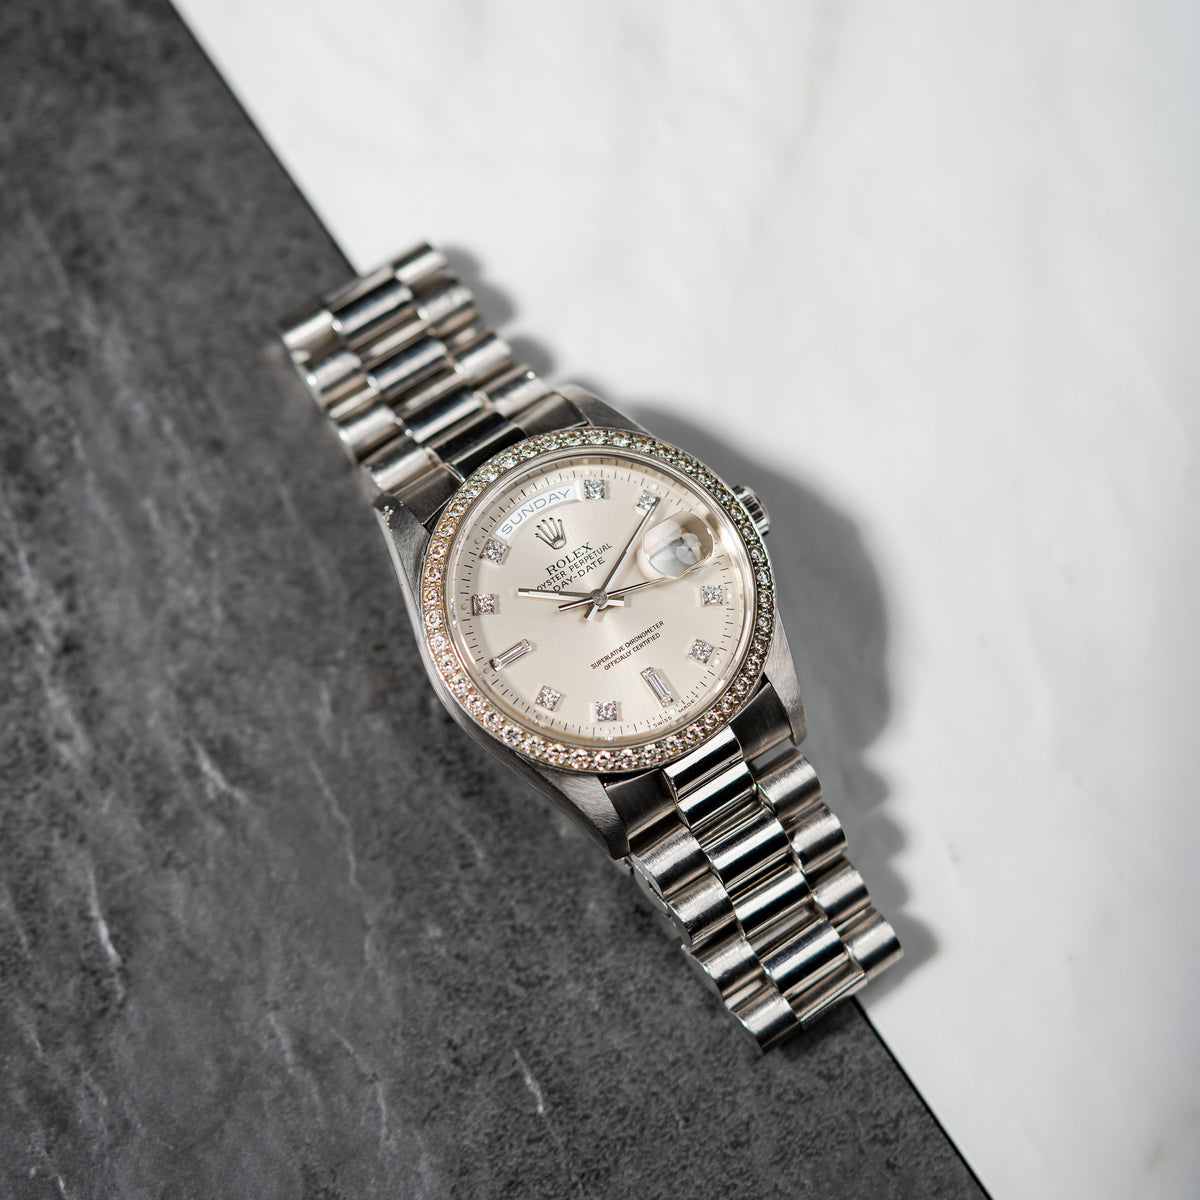 1966 Rolex Day Date Platinum Ref. 1804